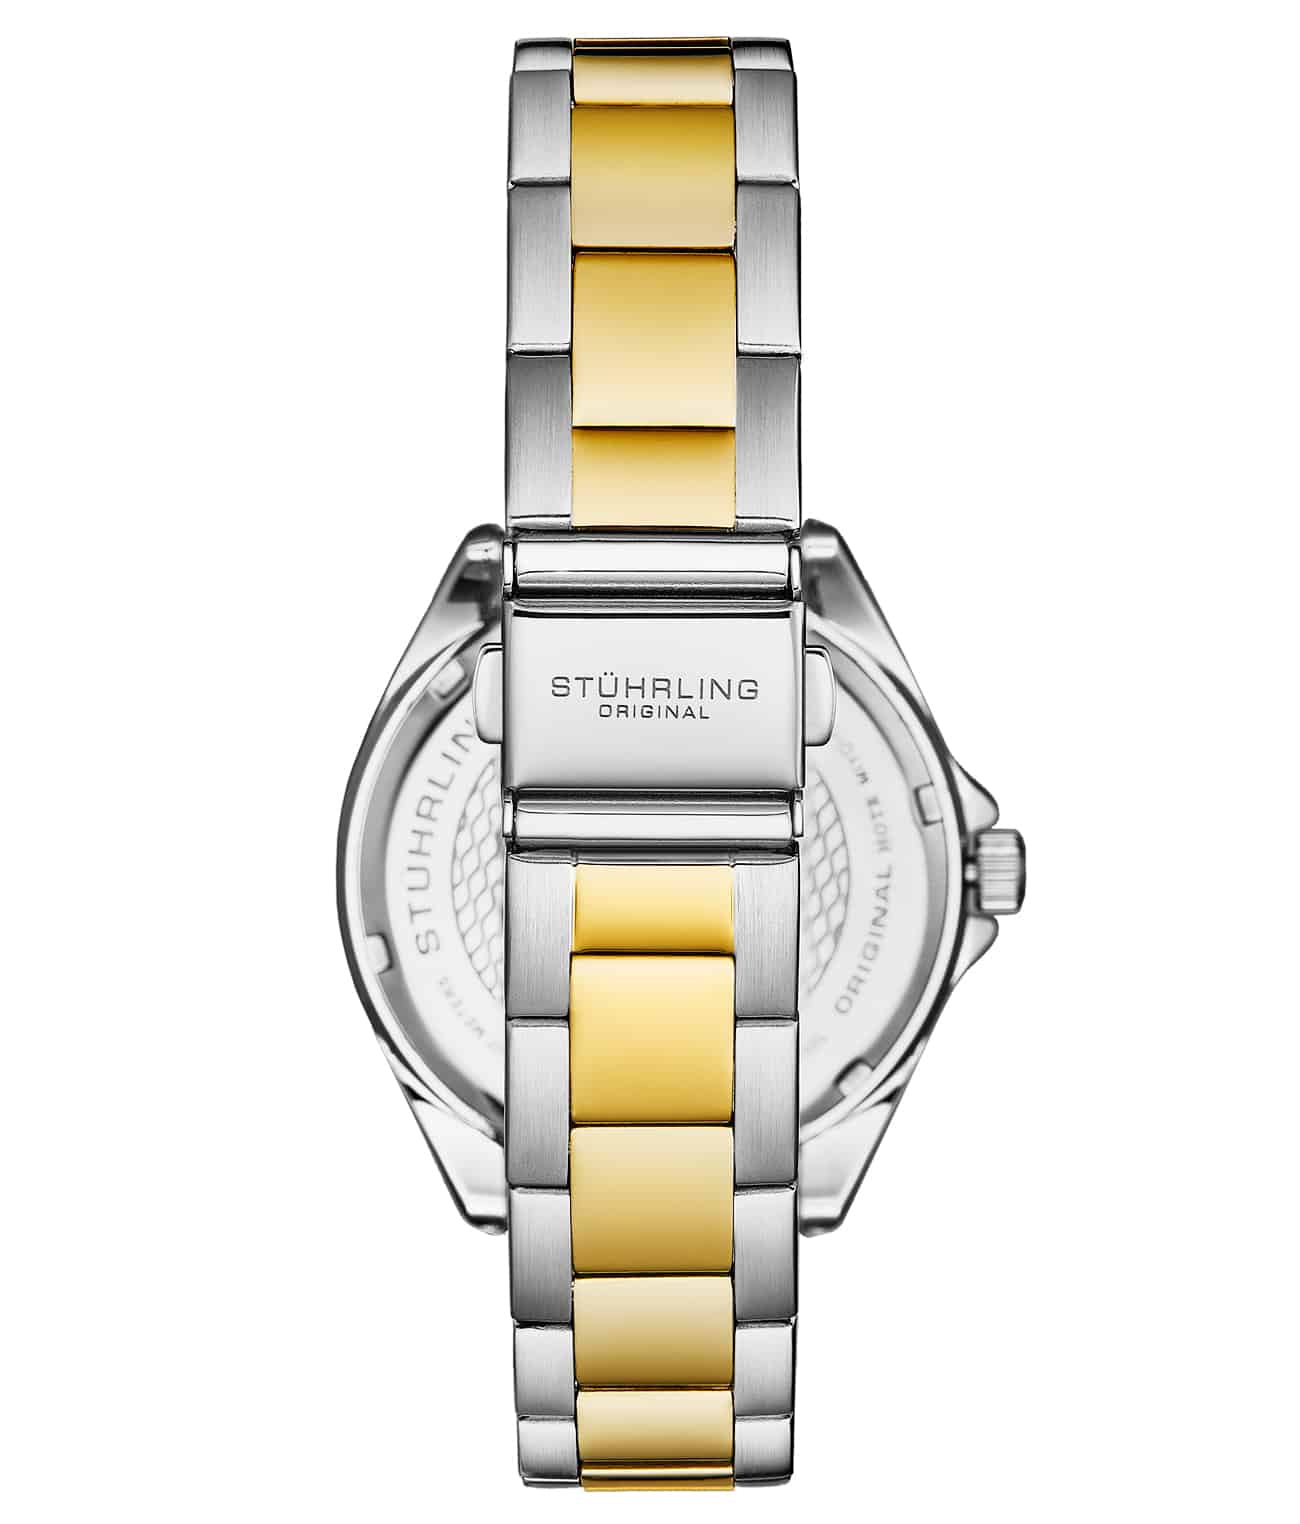 The Dynasty 4025 Japanese Quartz Crystal Bezel 40mm Watch